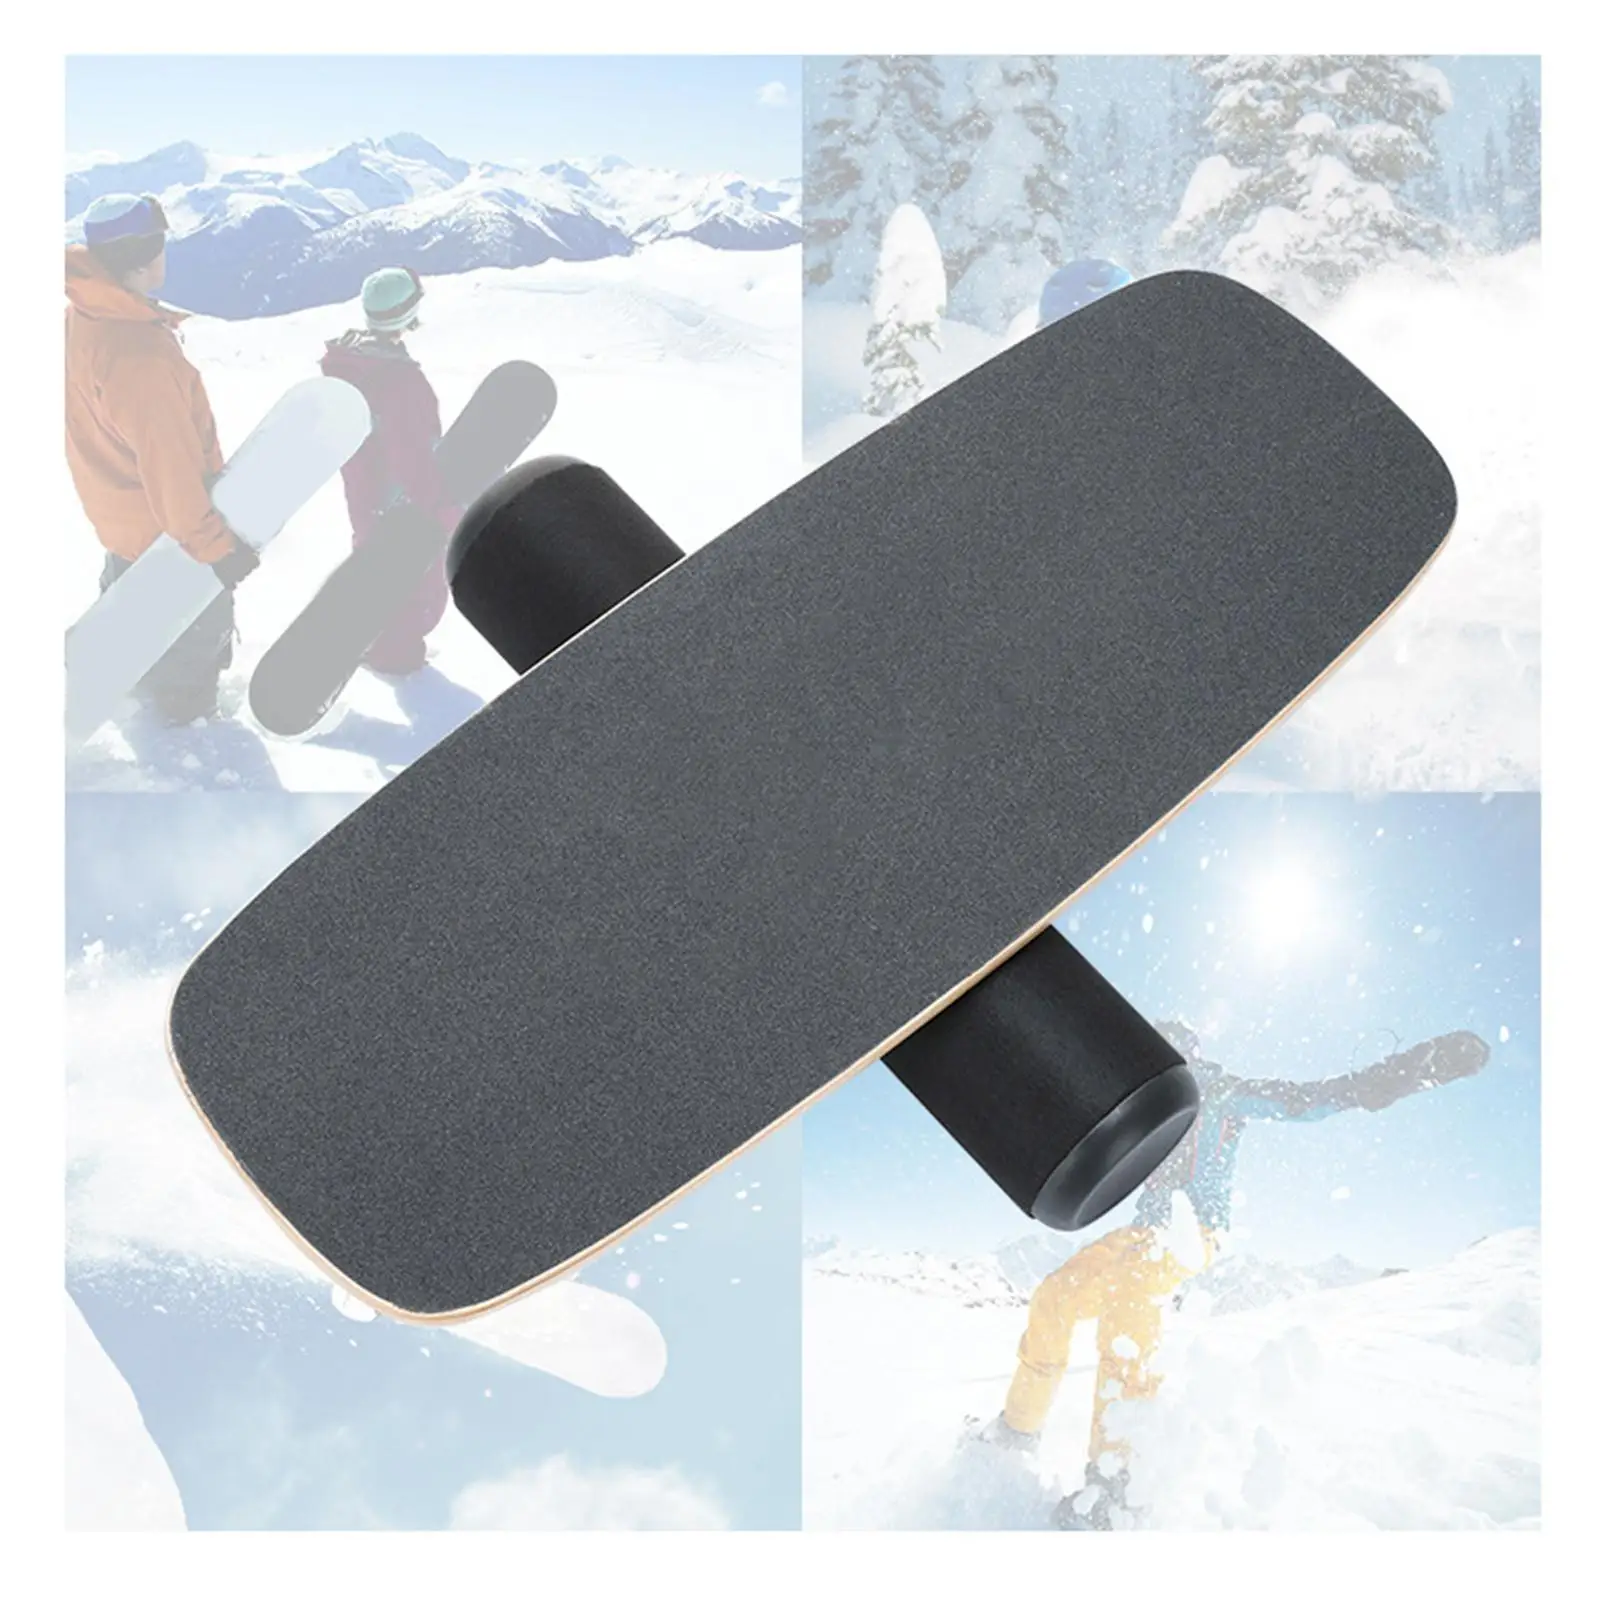 Balance Board Trainer Exercise Equipment Professional Core Strength Anti Slip Balancing Board for Snowboard Skateboard Hockey